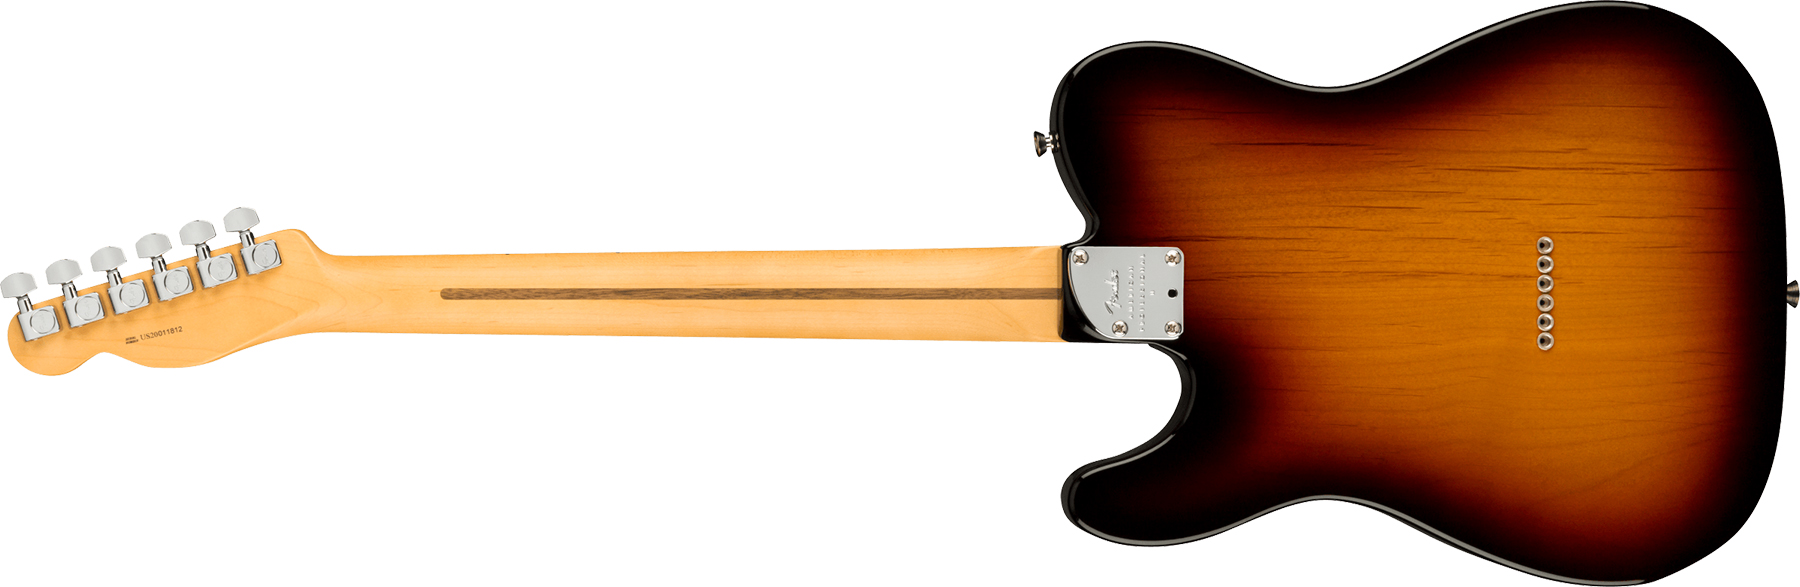 Fender Tele American Professional Ii Usa Mn - 3-color Sunburst - Guitarra eléctrica con forma de tel - Variation 1